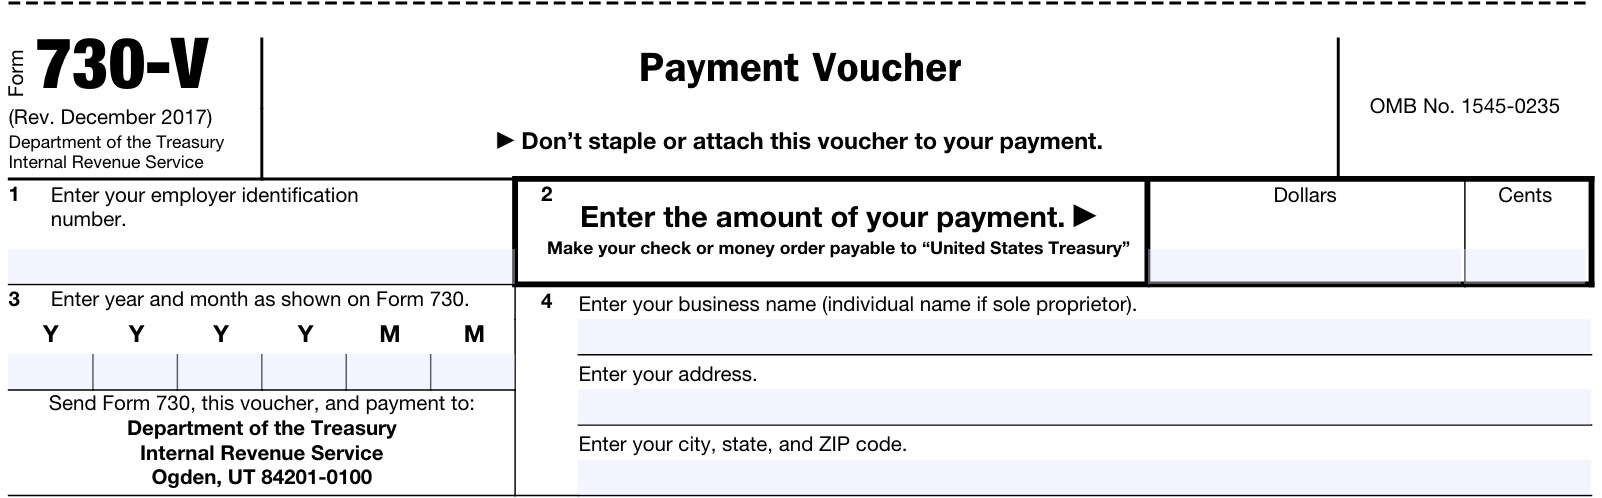 irs form 730-v, payment voucher